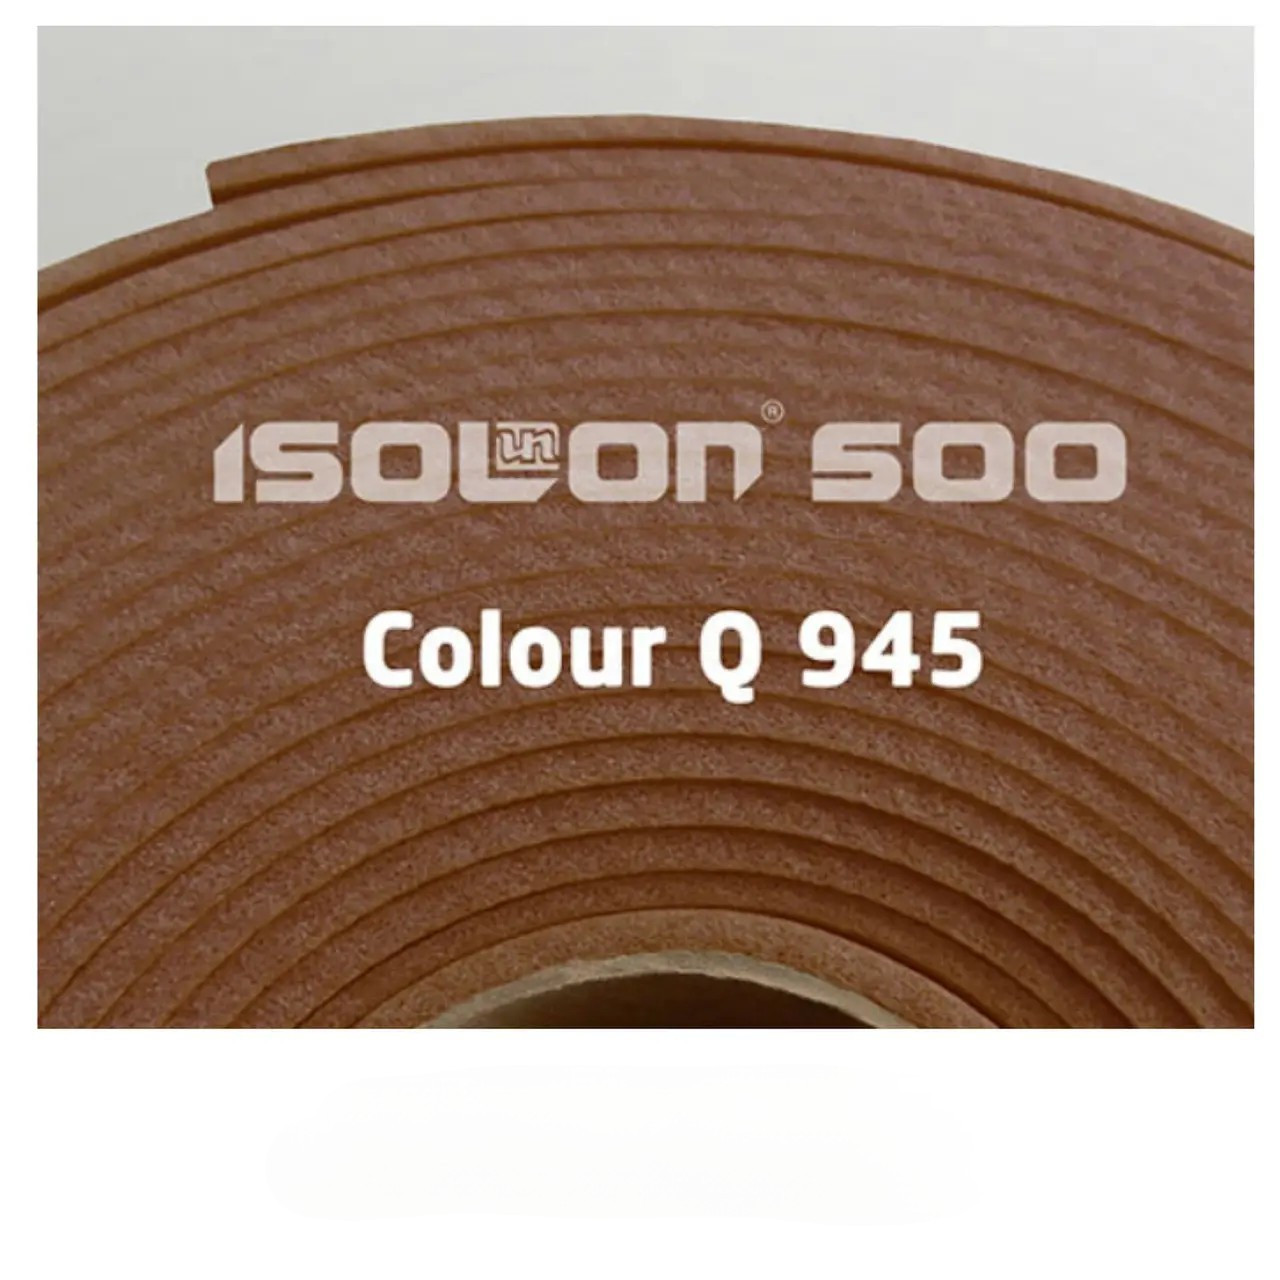 Ізолон  3002 Colour Q945 0.75 шоколад, фото 1